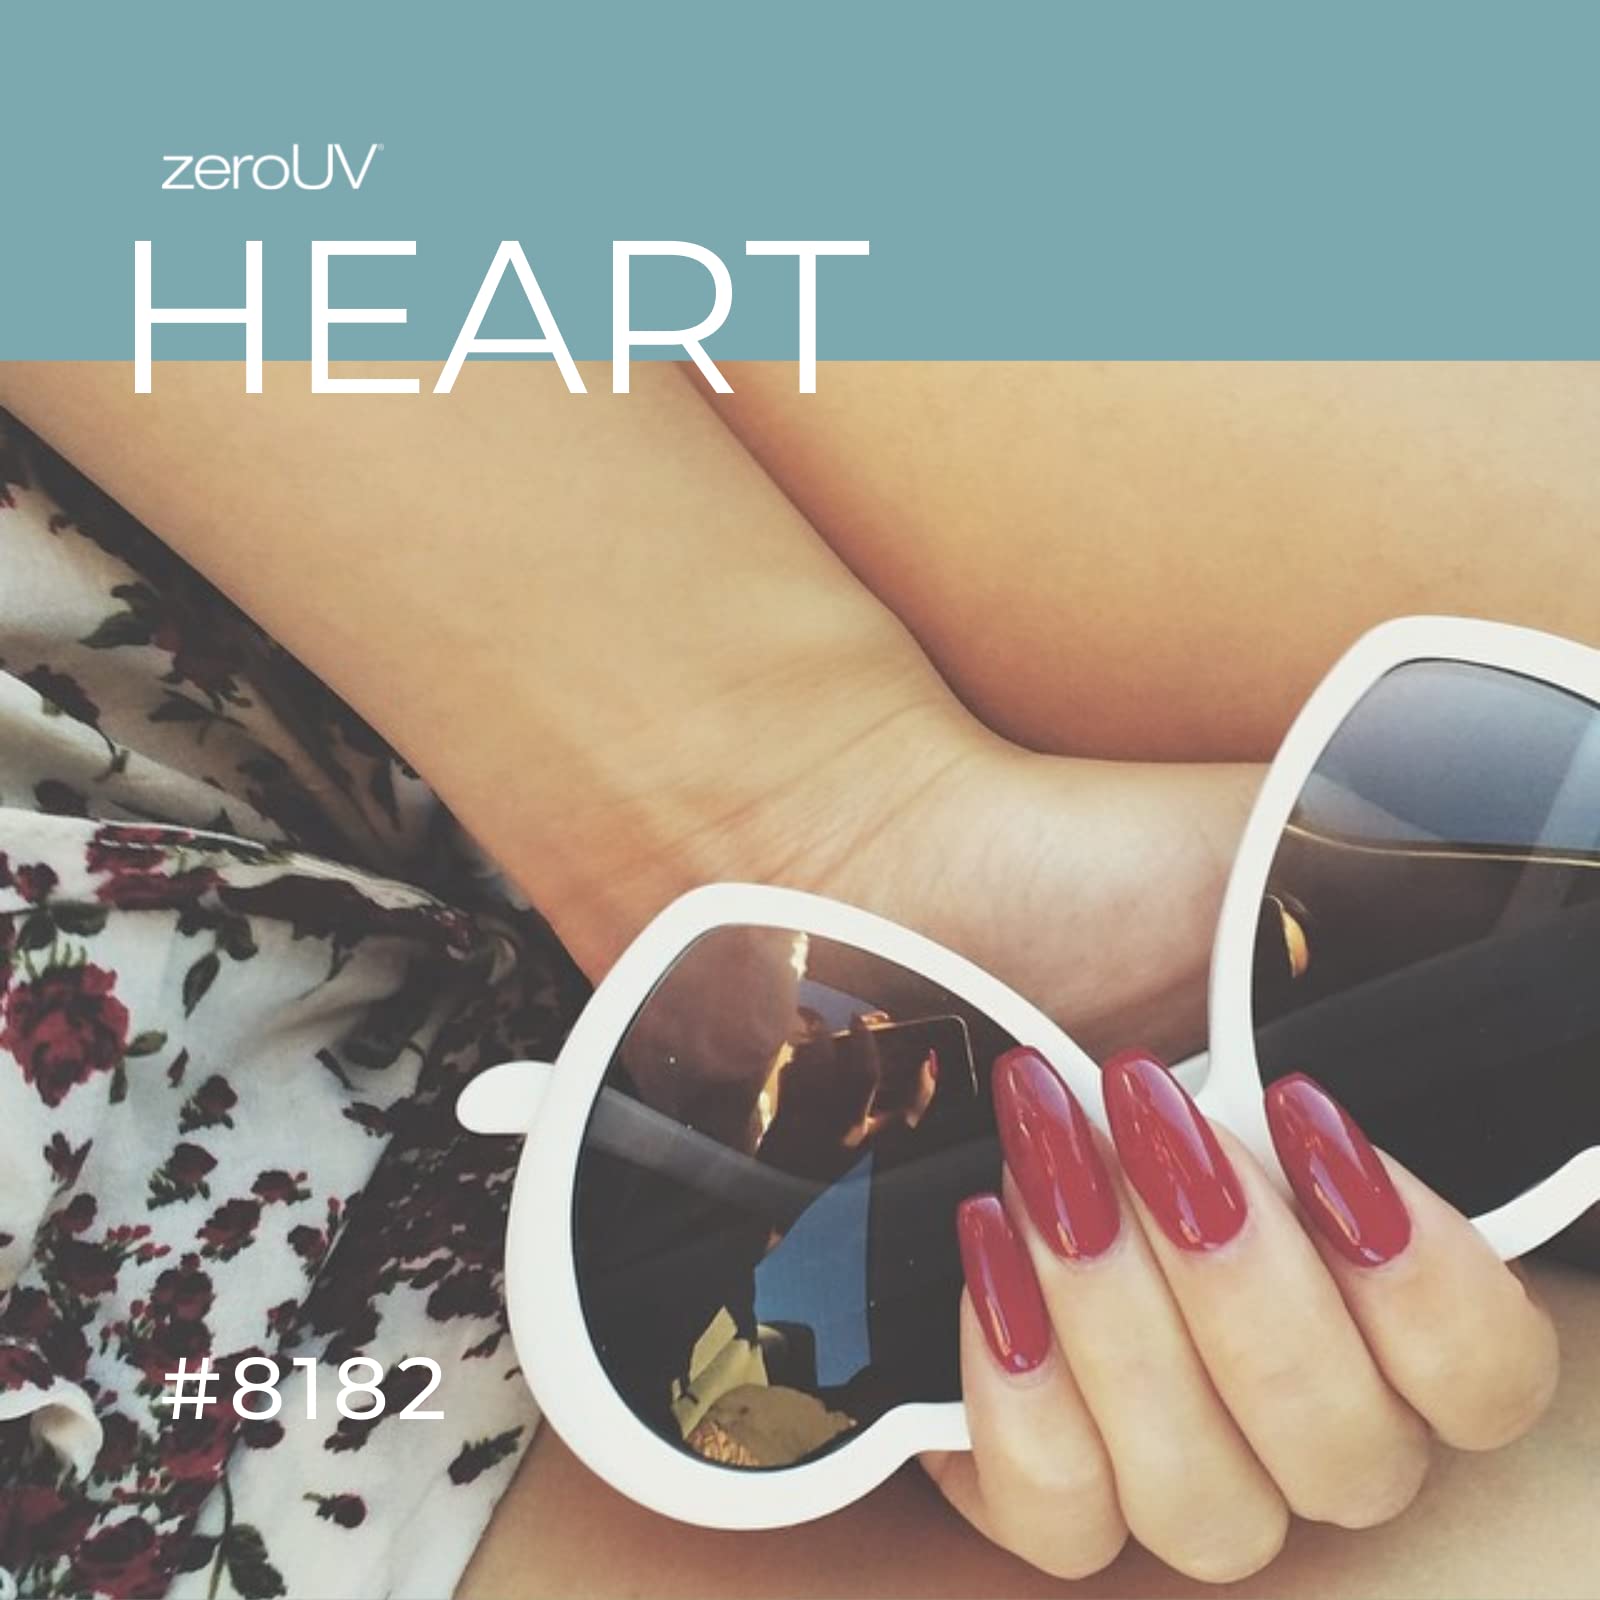 Oversized Heart Shaped Sunglasses UV400 Cute Trendy Love Fashion Eyewear for Women 52mm